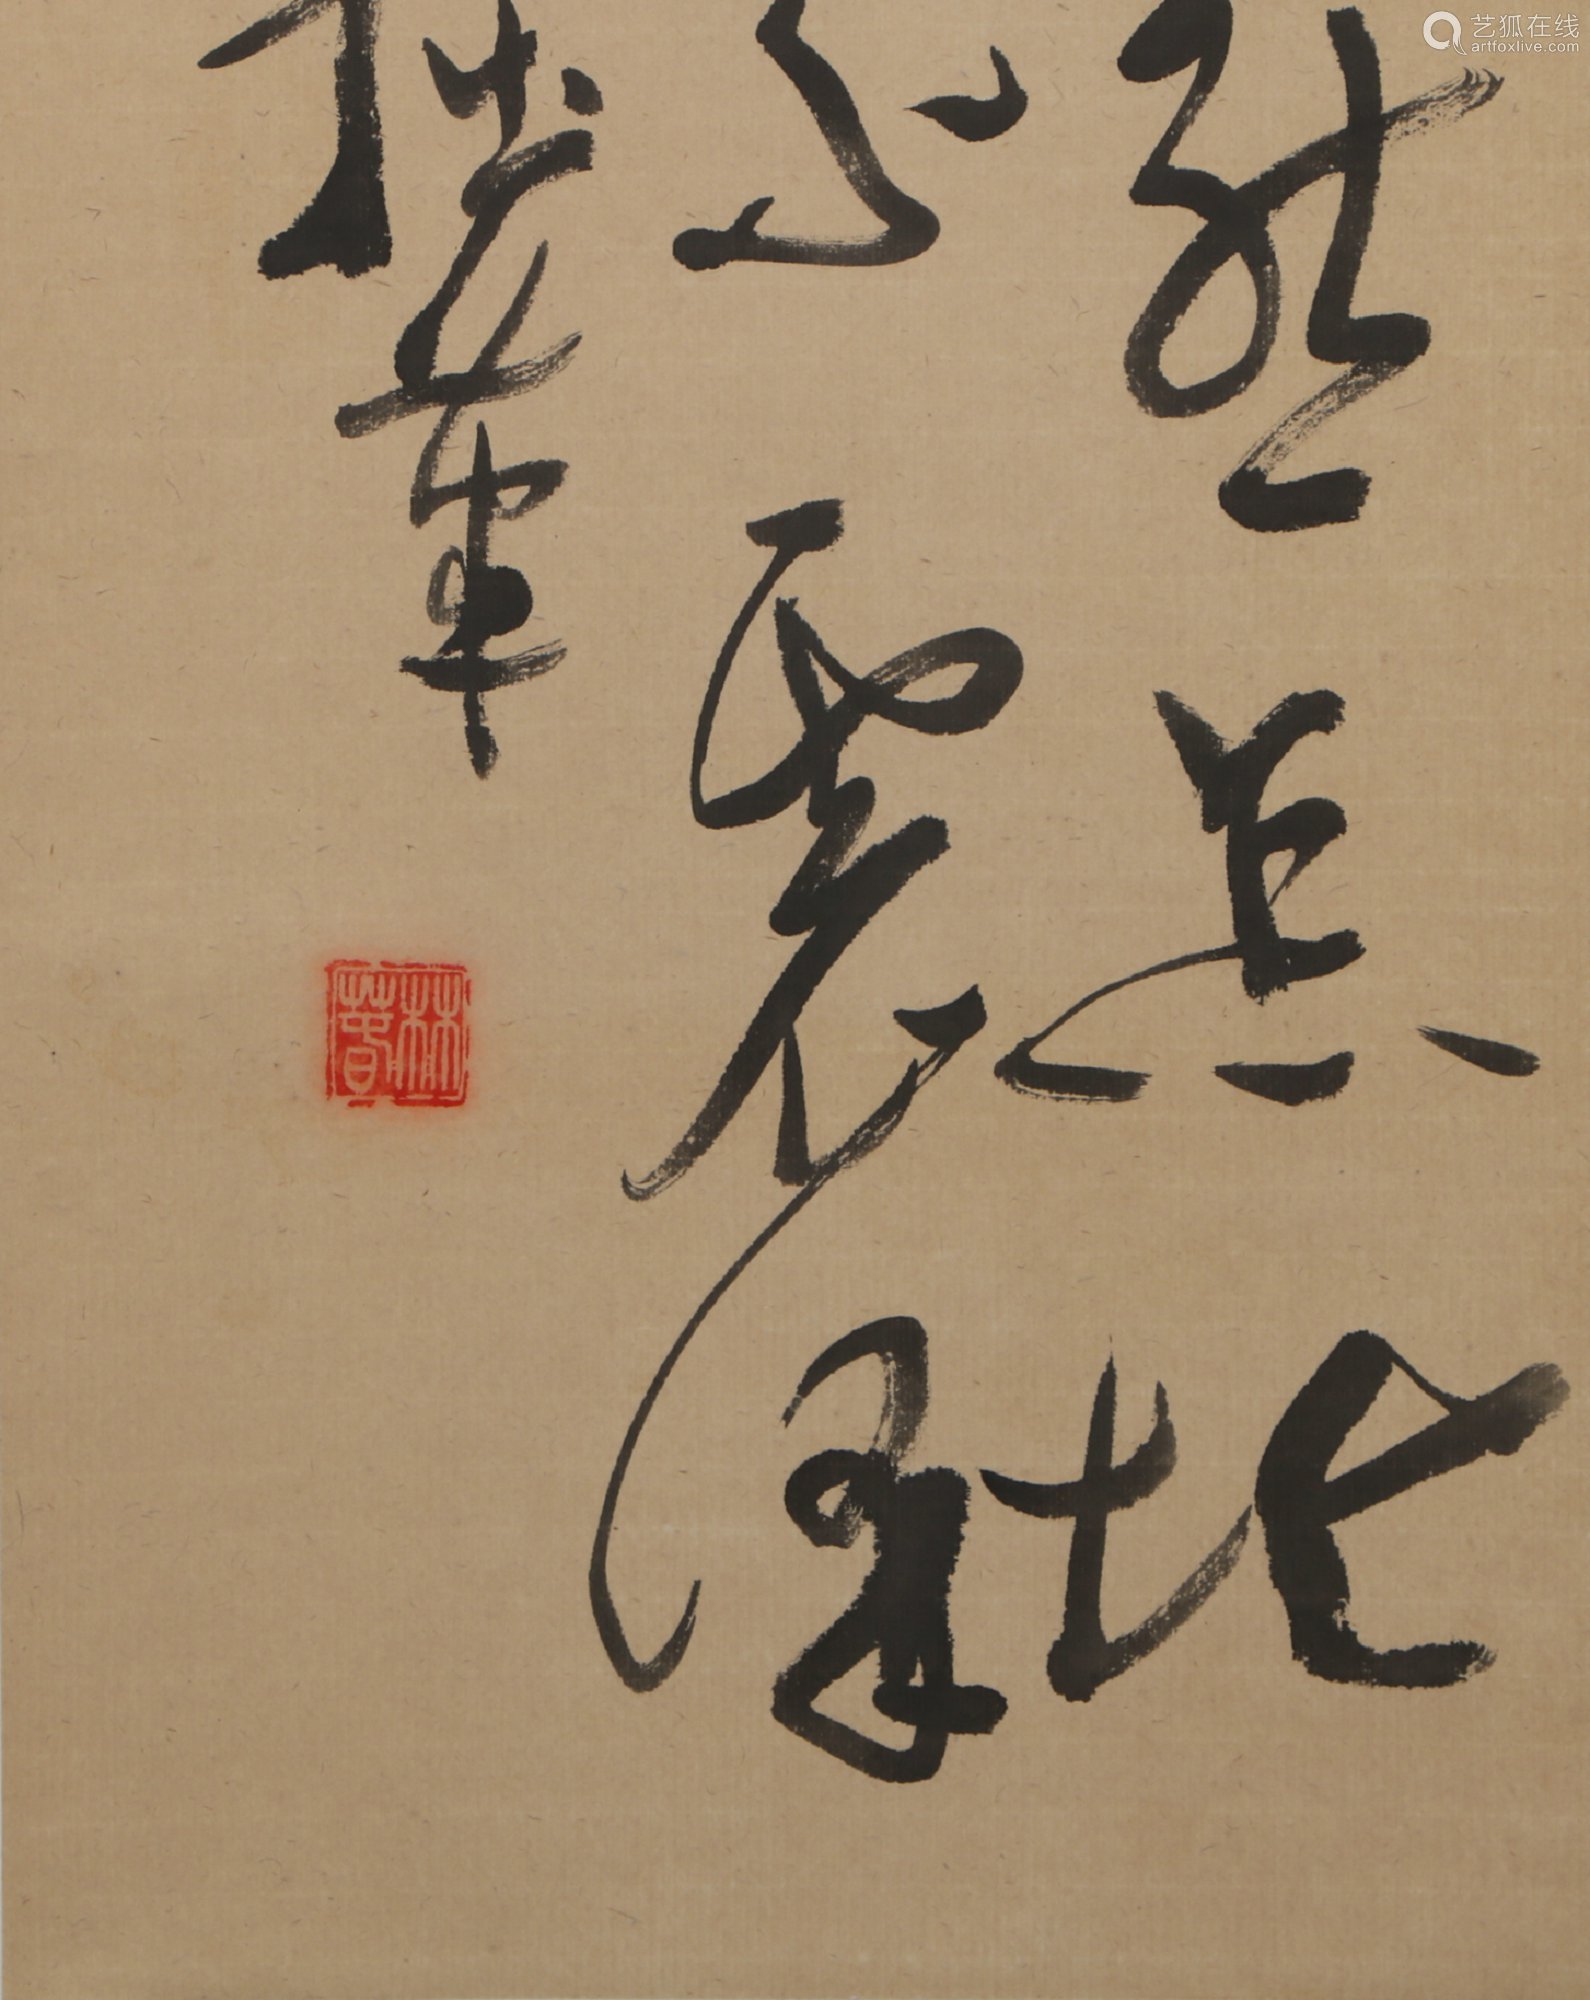 Lin Chun's cursive calligraphy vertical scroll